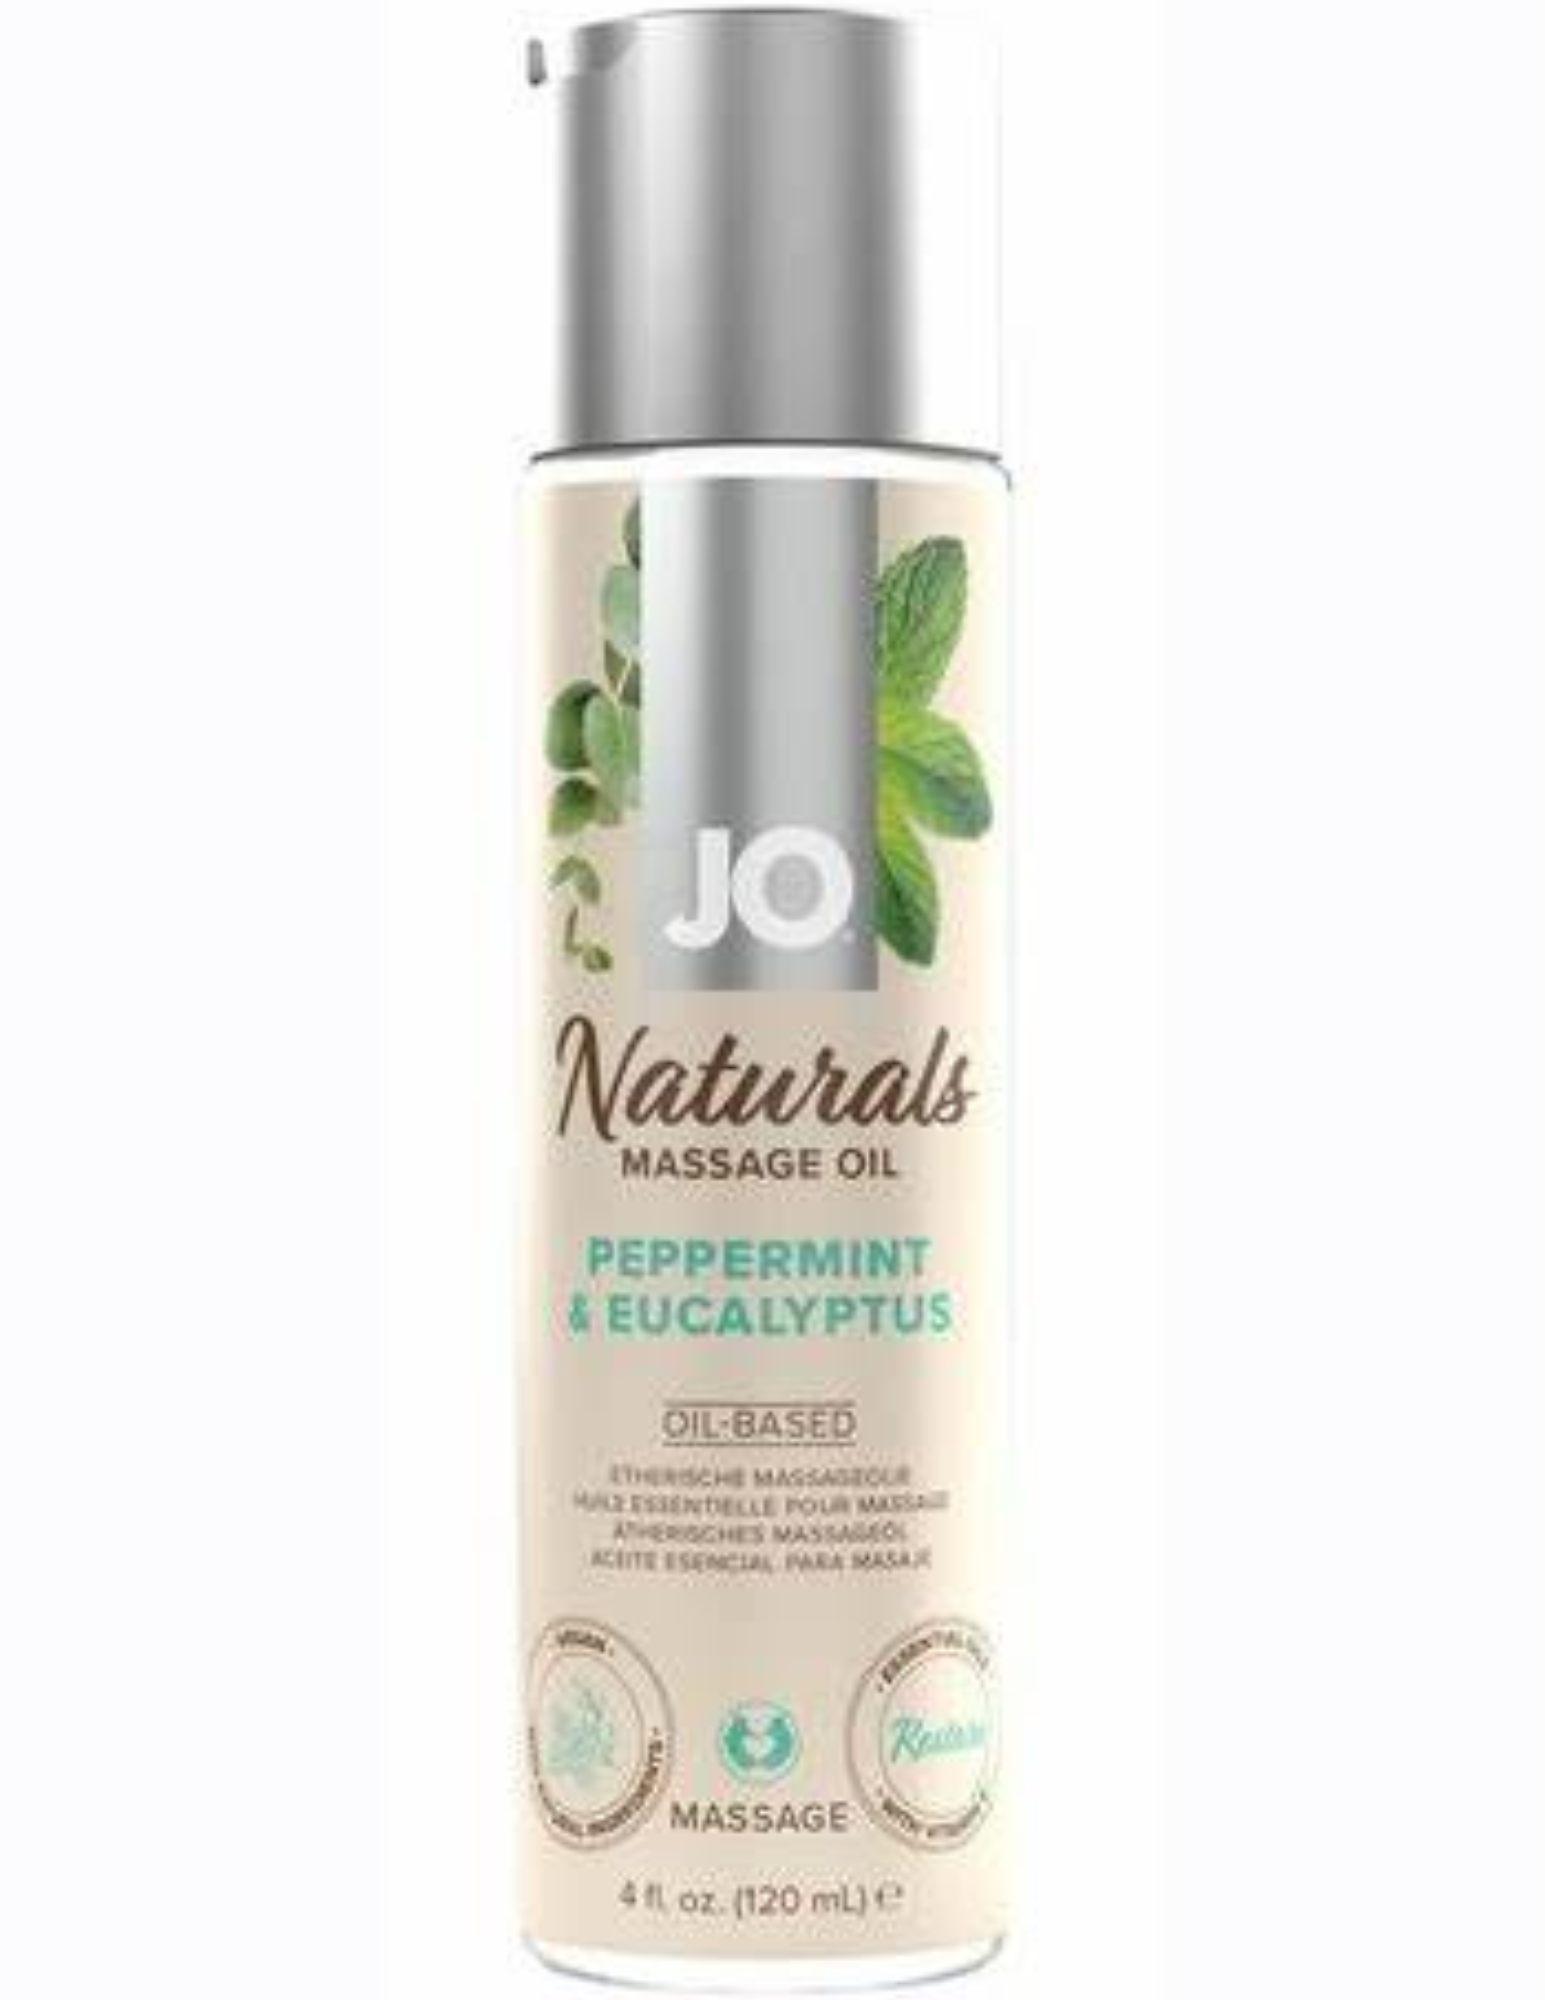 JO Naturals Massage Oil 4oz bottle Peppermint and Eucalyptus.